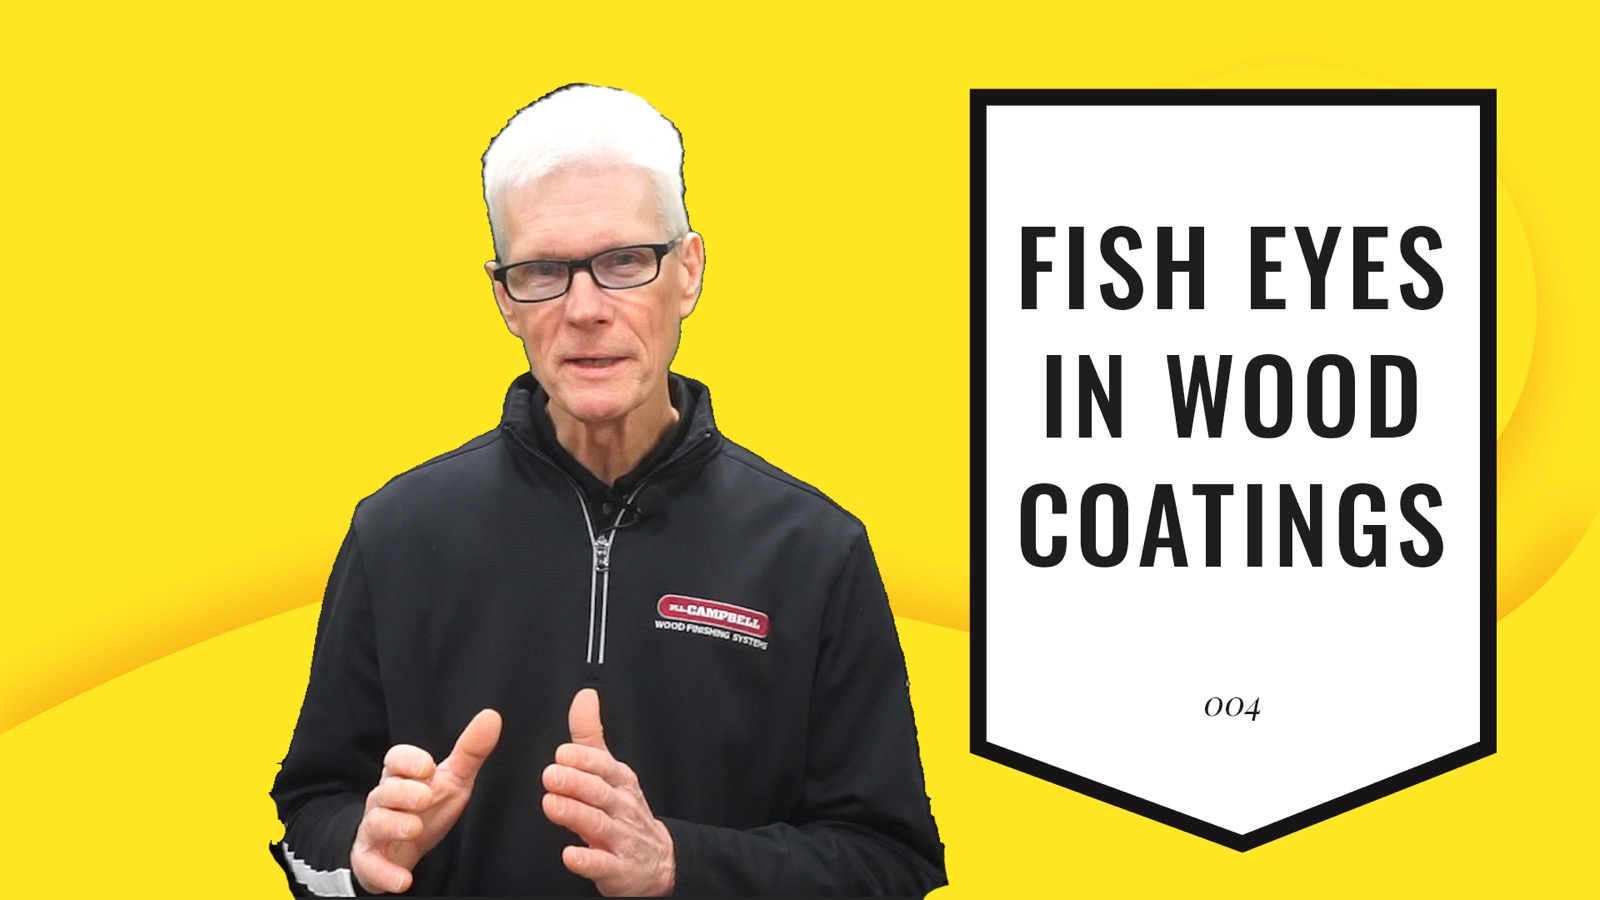 What is a Wood Coating Fish Eye?